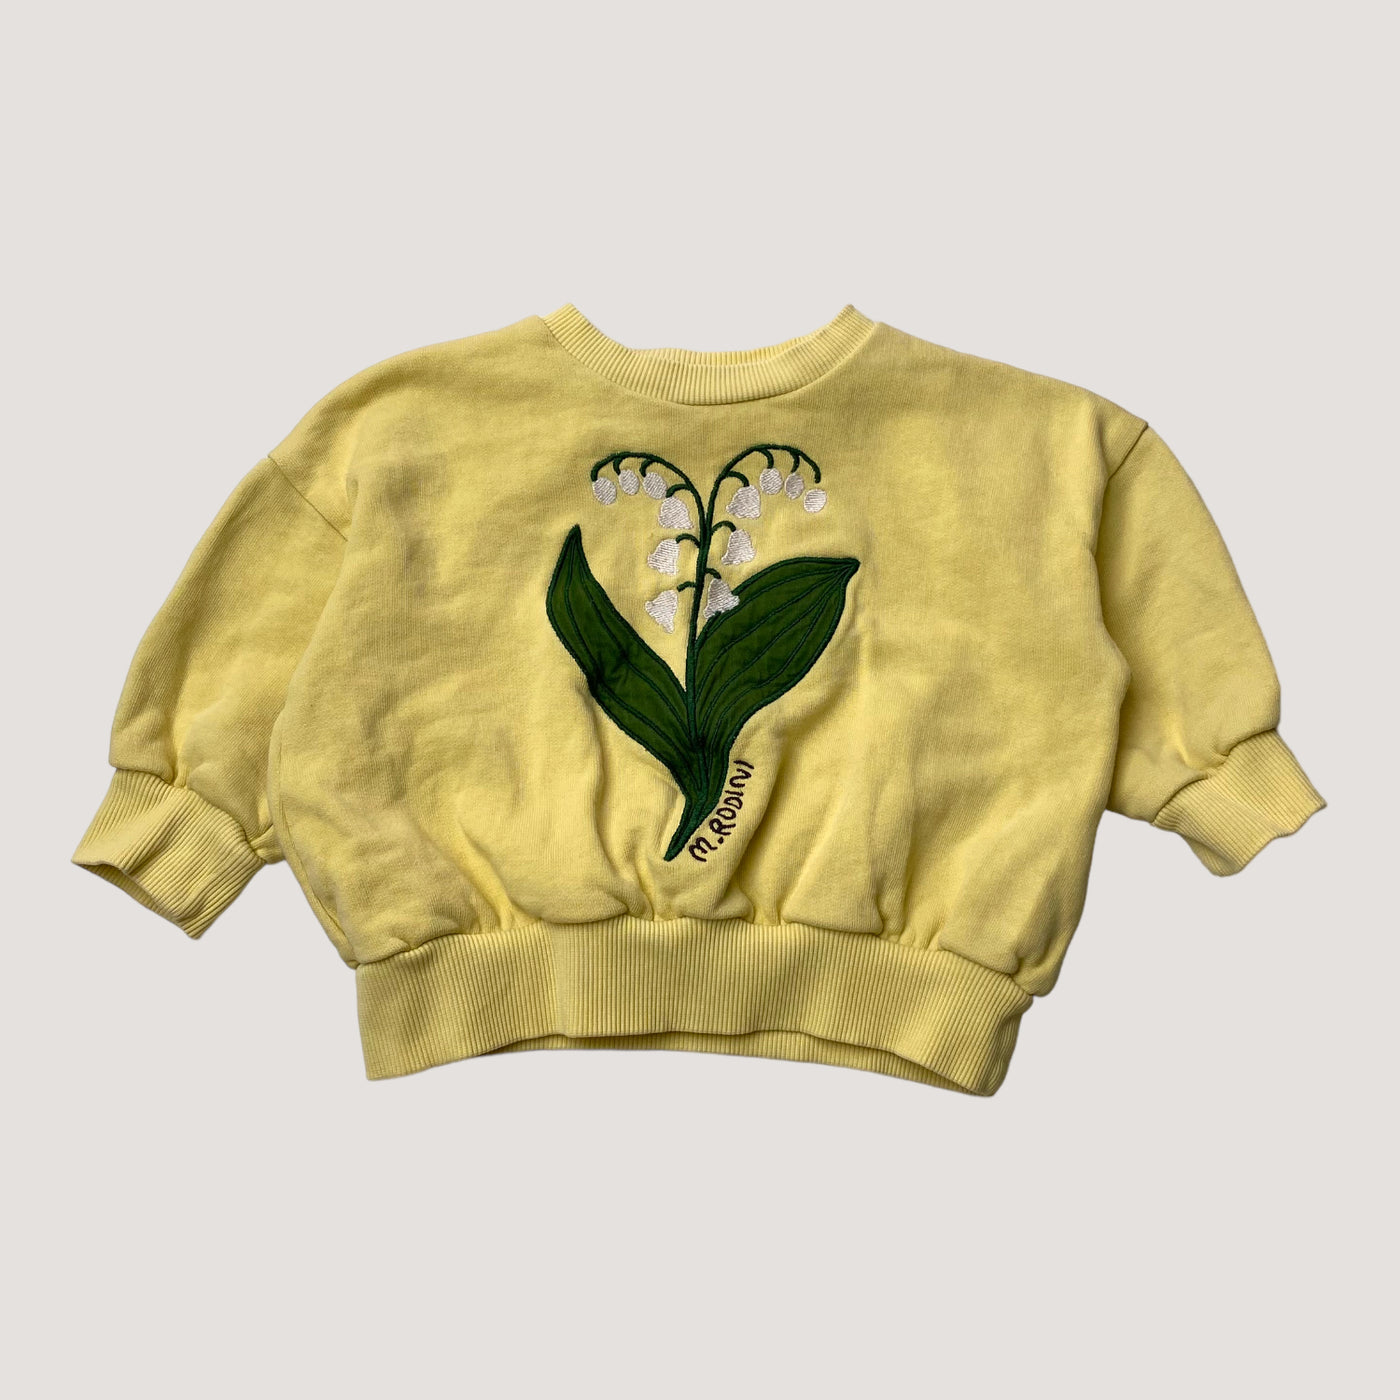 Mini Rodini sweatshirt, yellow | 80/86cm